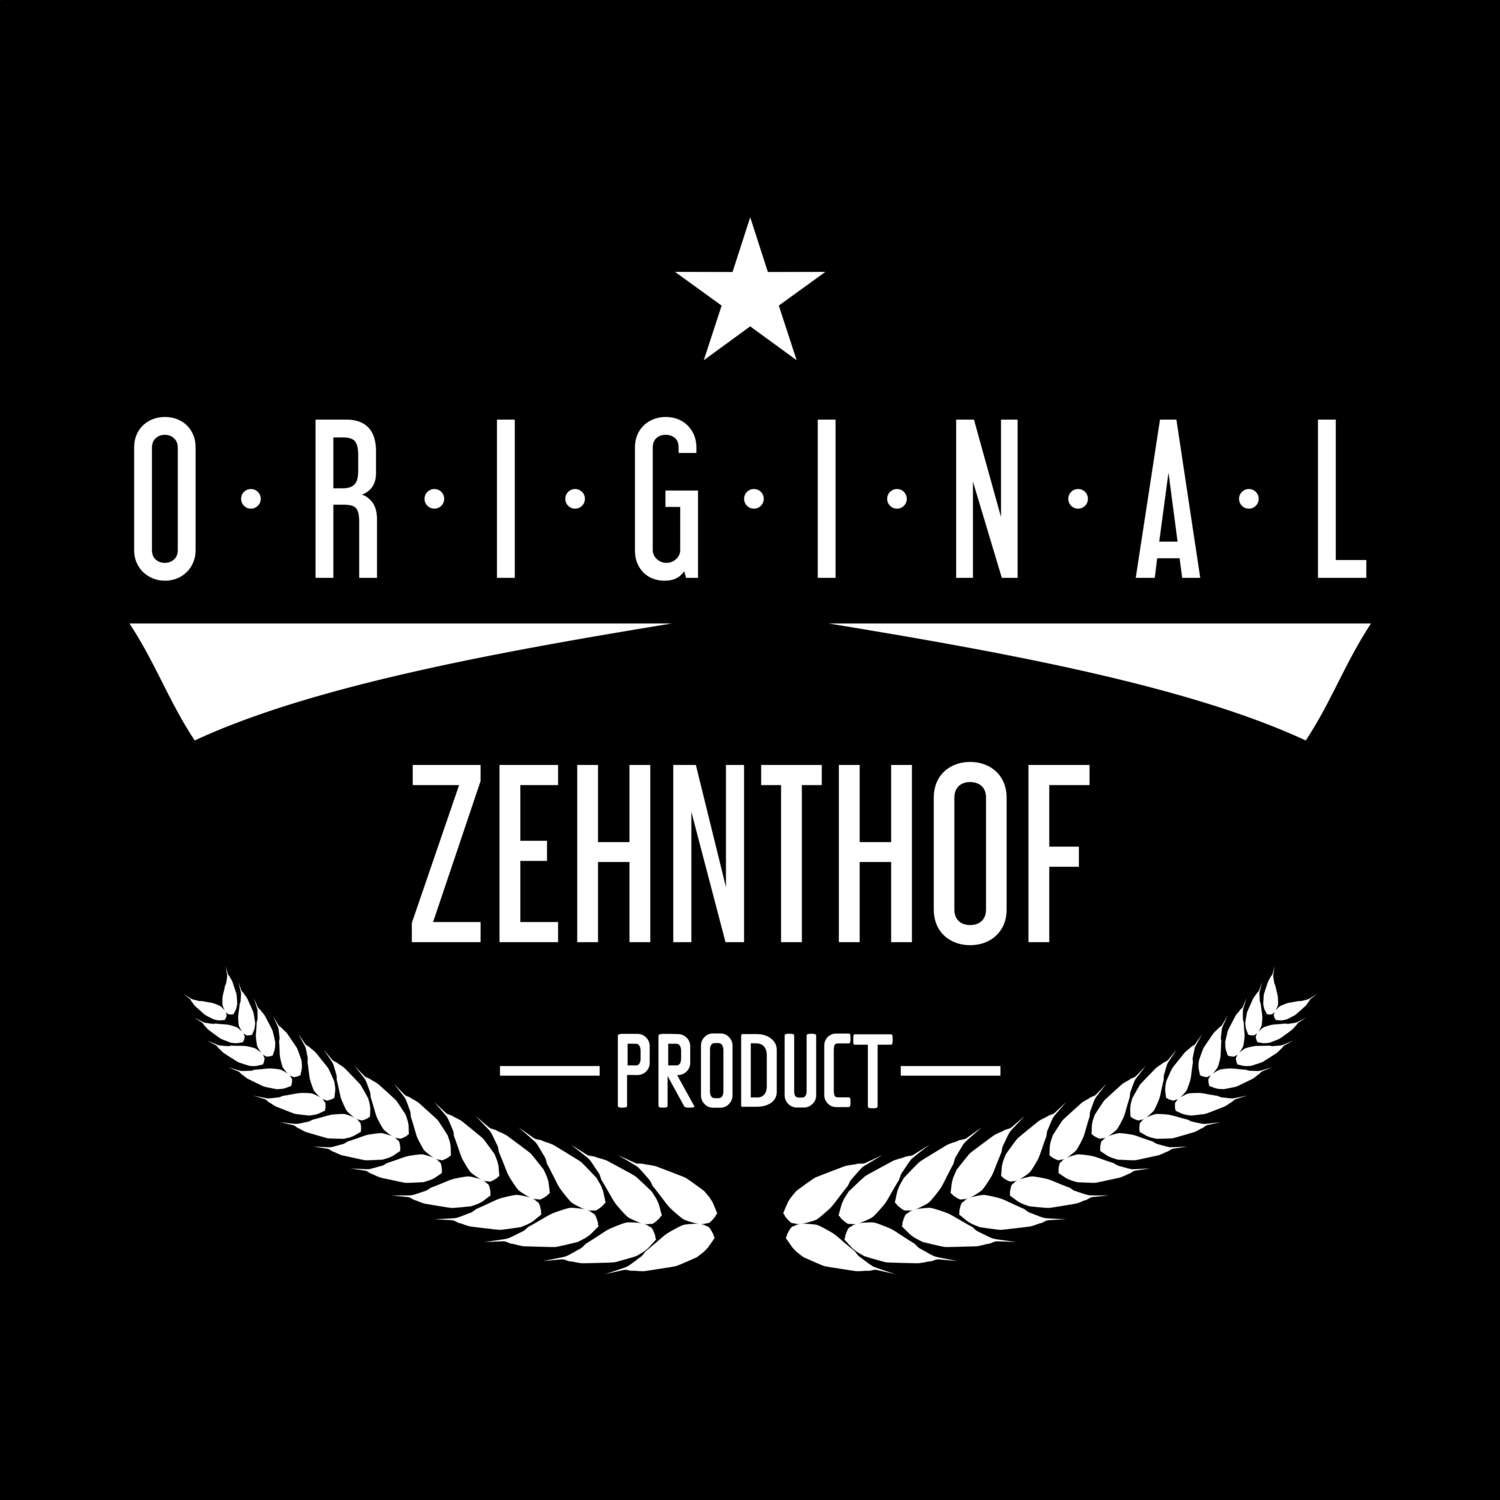 Zehnthof T-Shirt »Original Product«